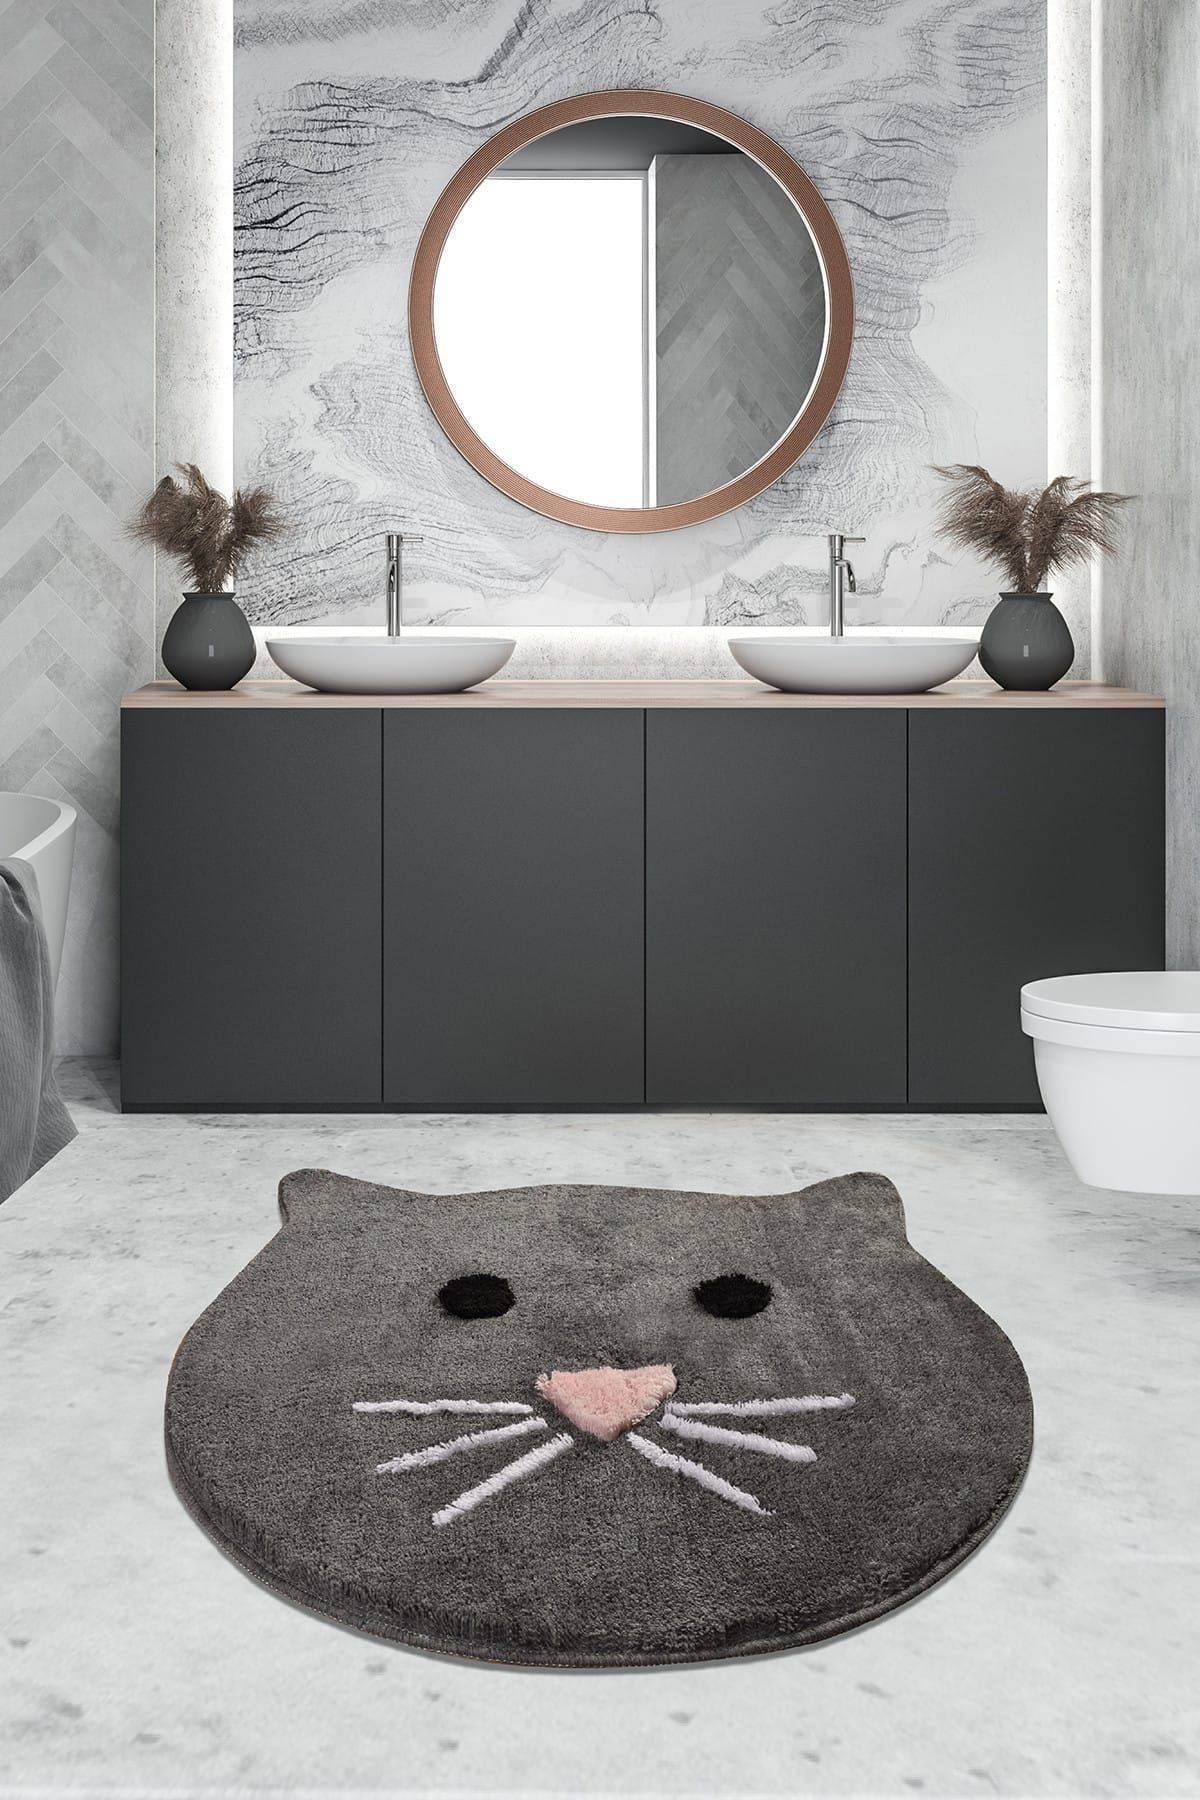 Chilai Home Cat Füme 90x90 Cm Banyo Halısı Yıkanabilir, Kaymaz Taban